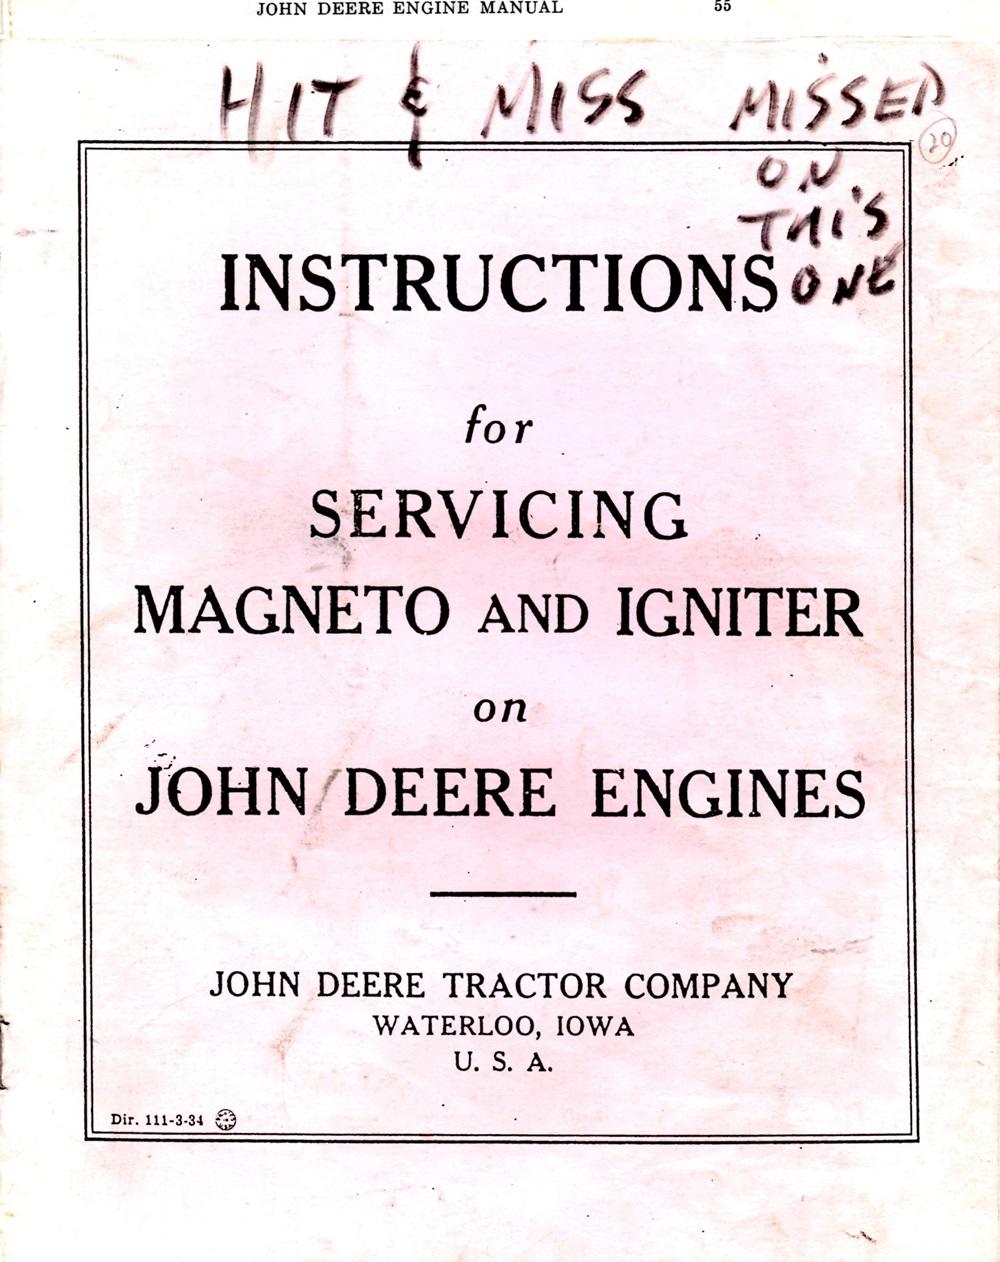 John Deere Magneto and Igniter Service Instructions 